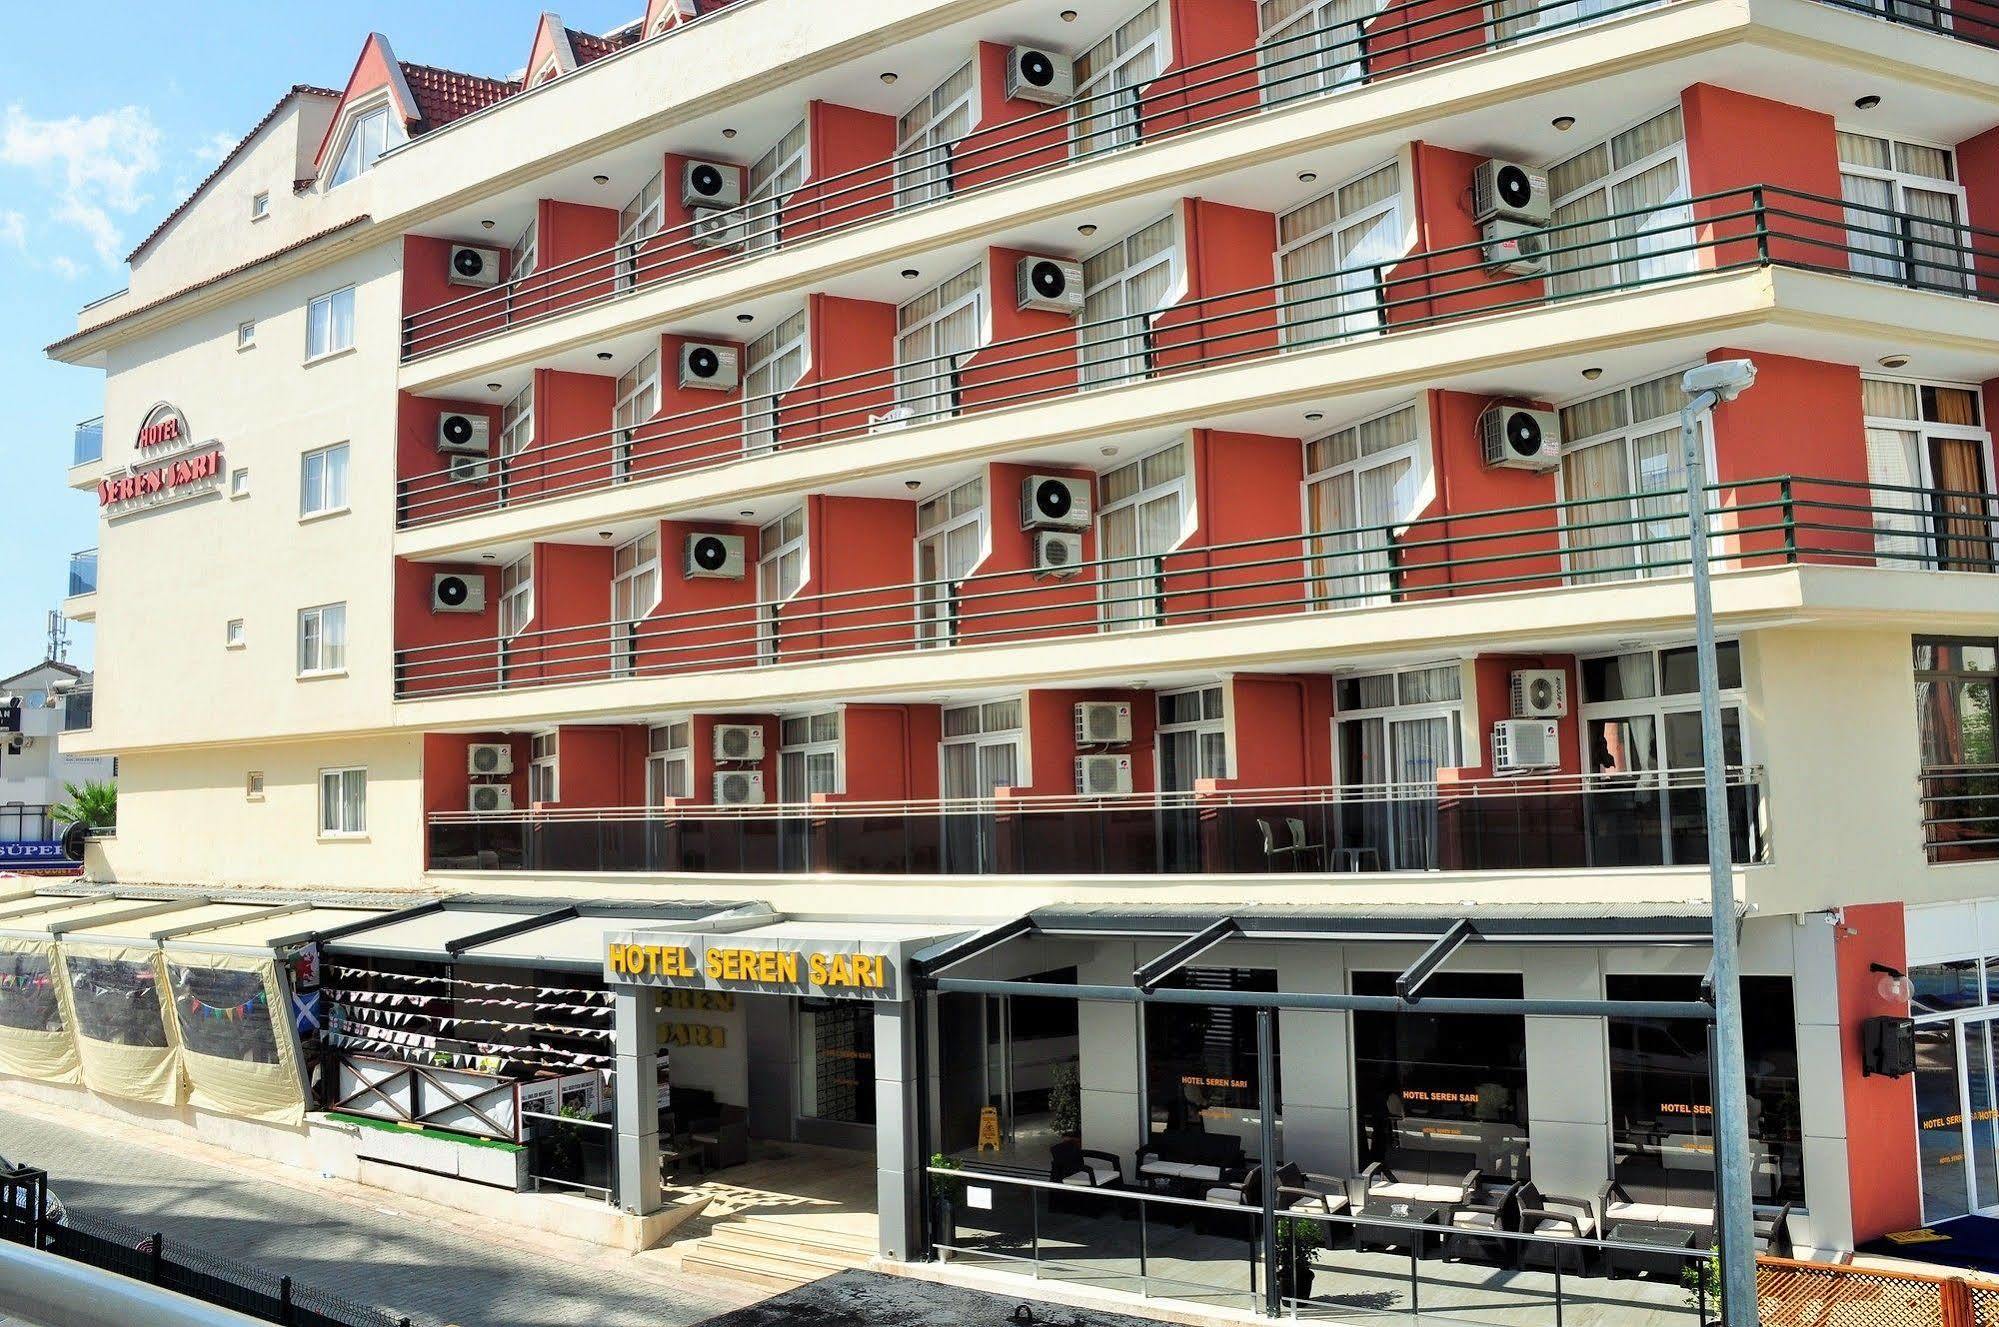 Seren Sari Hotel Marmaris Exterior foto